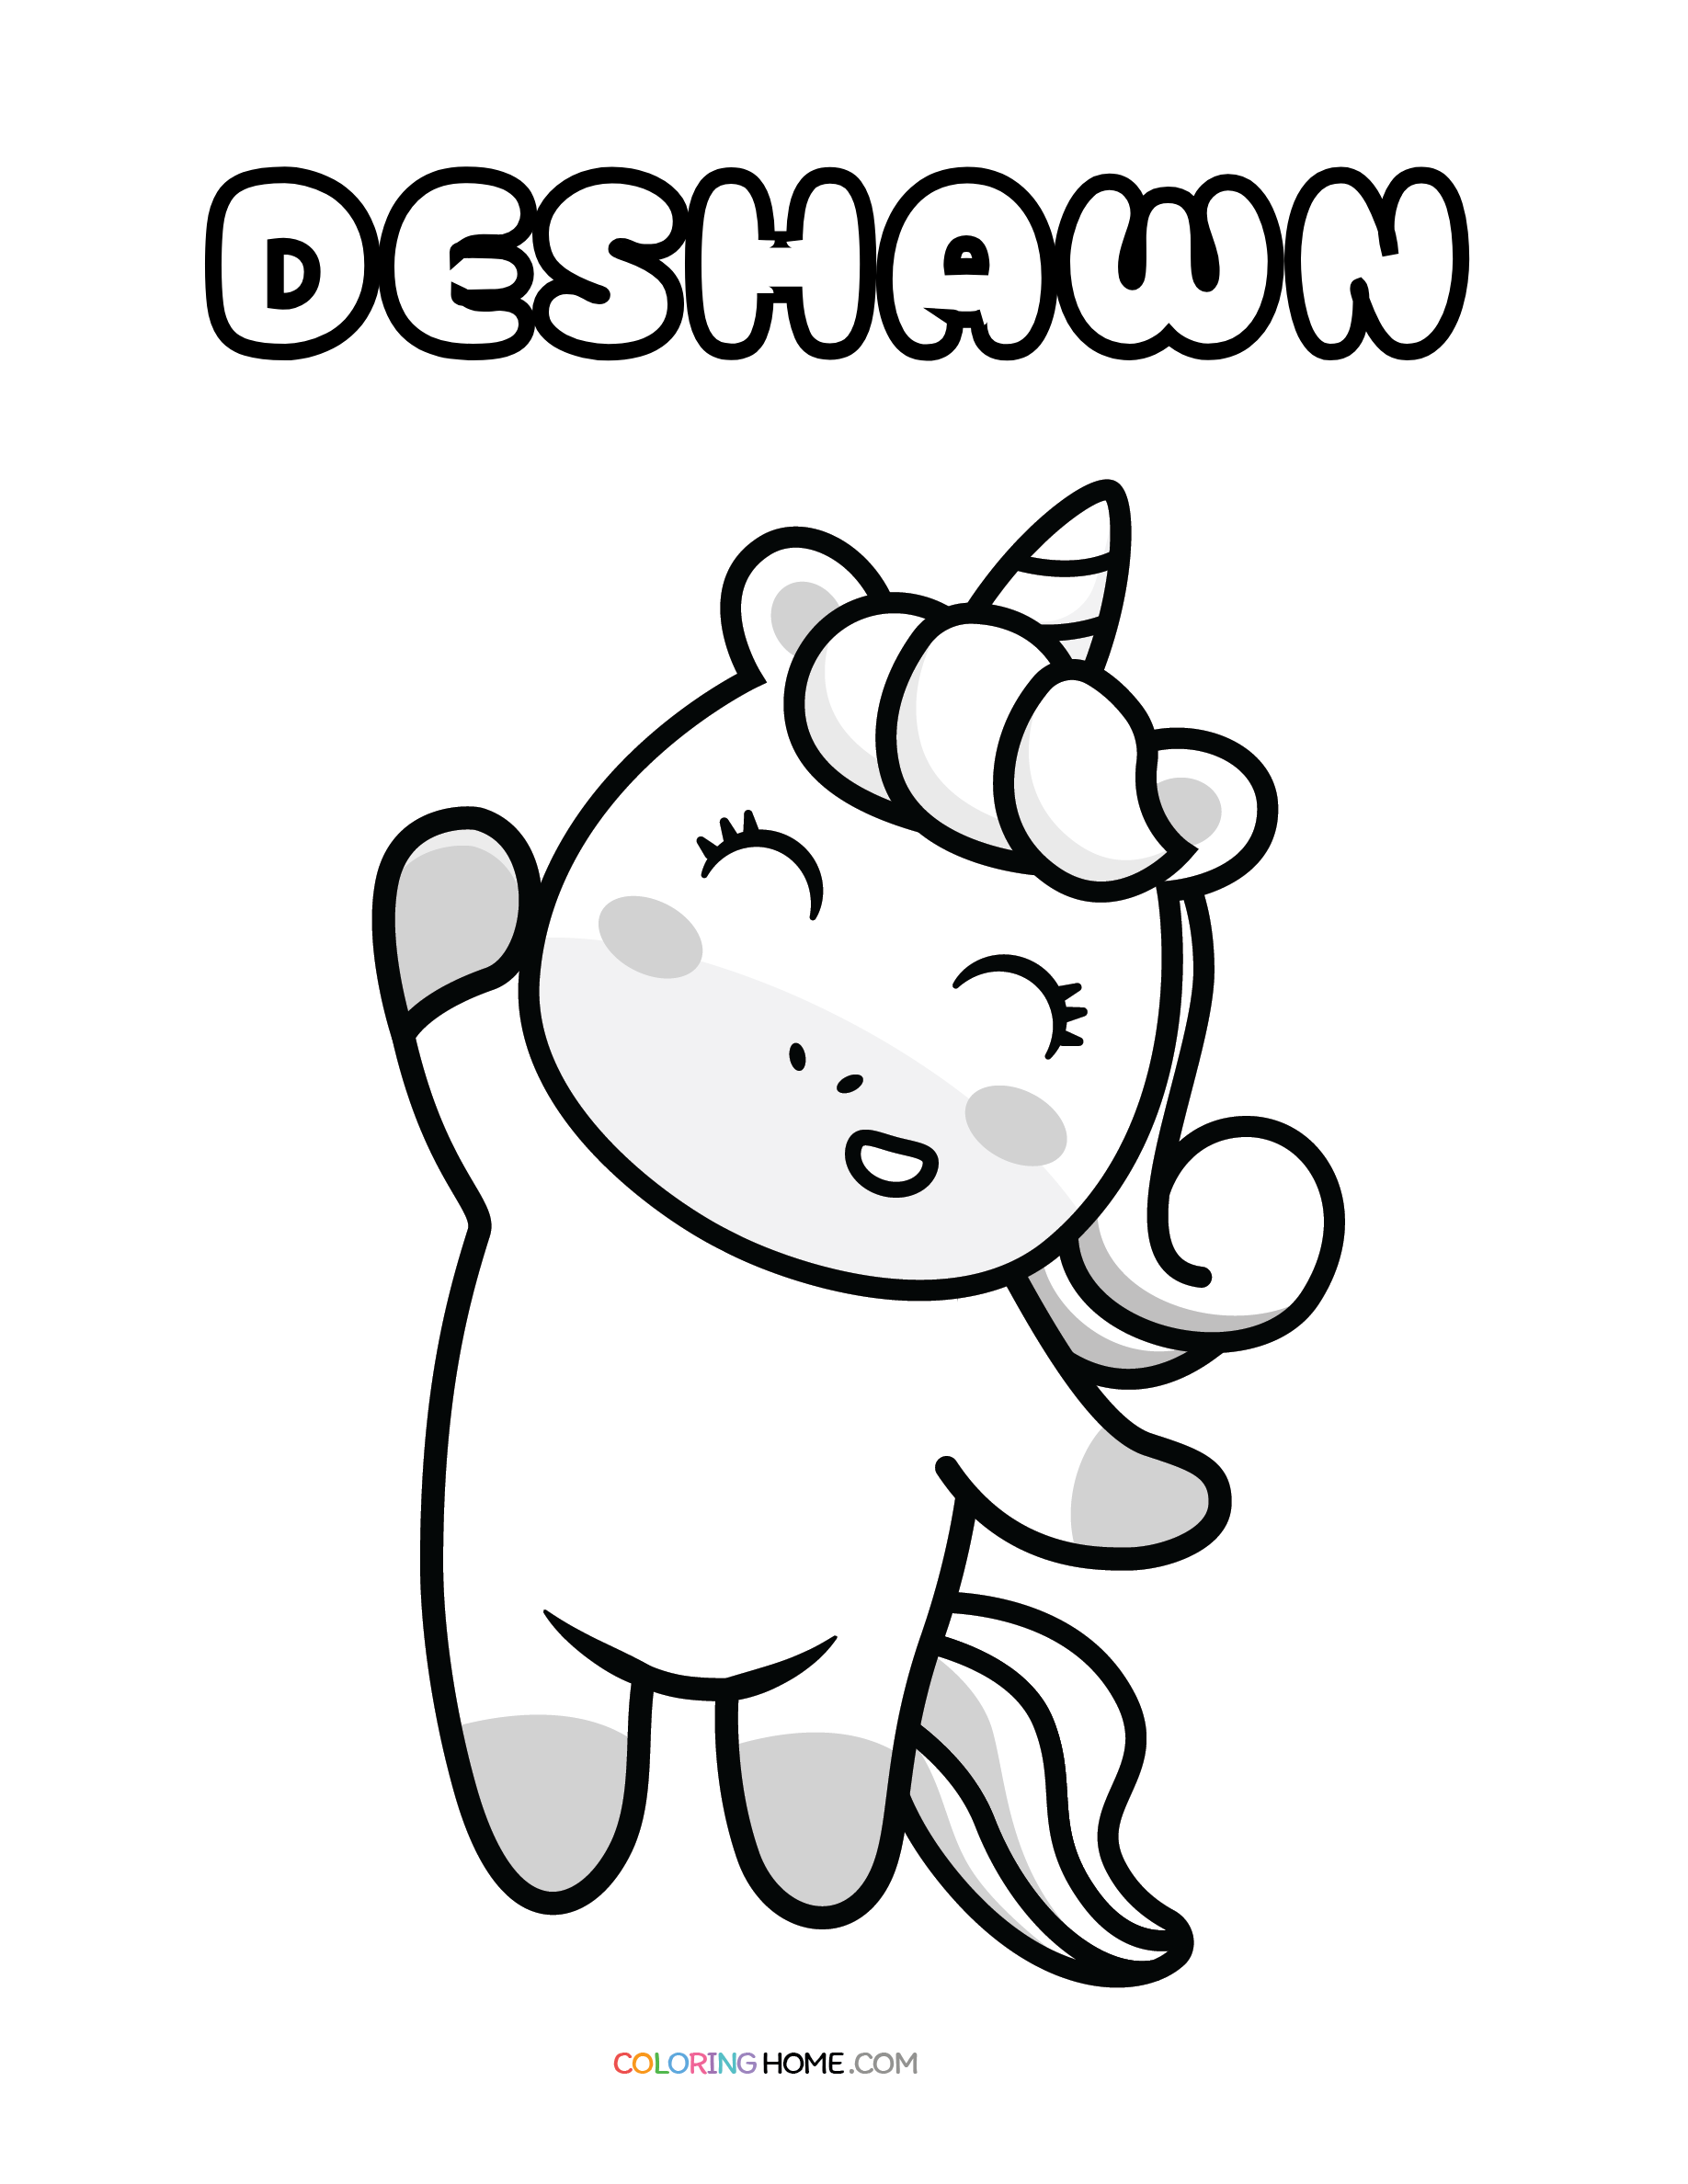 Deshawn unicorn coloring page